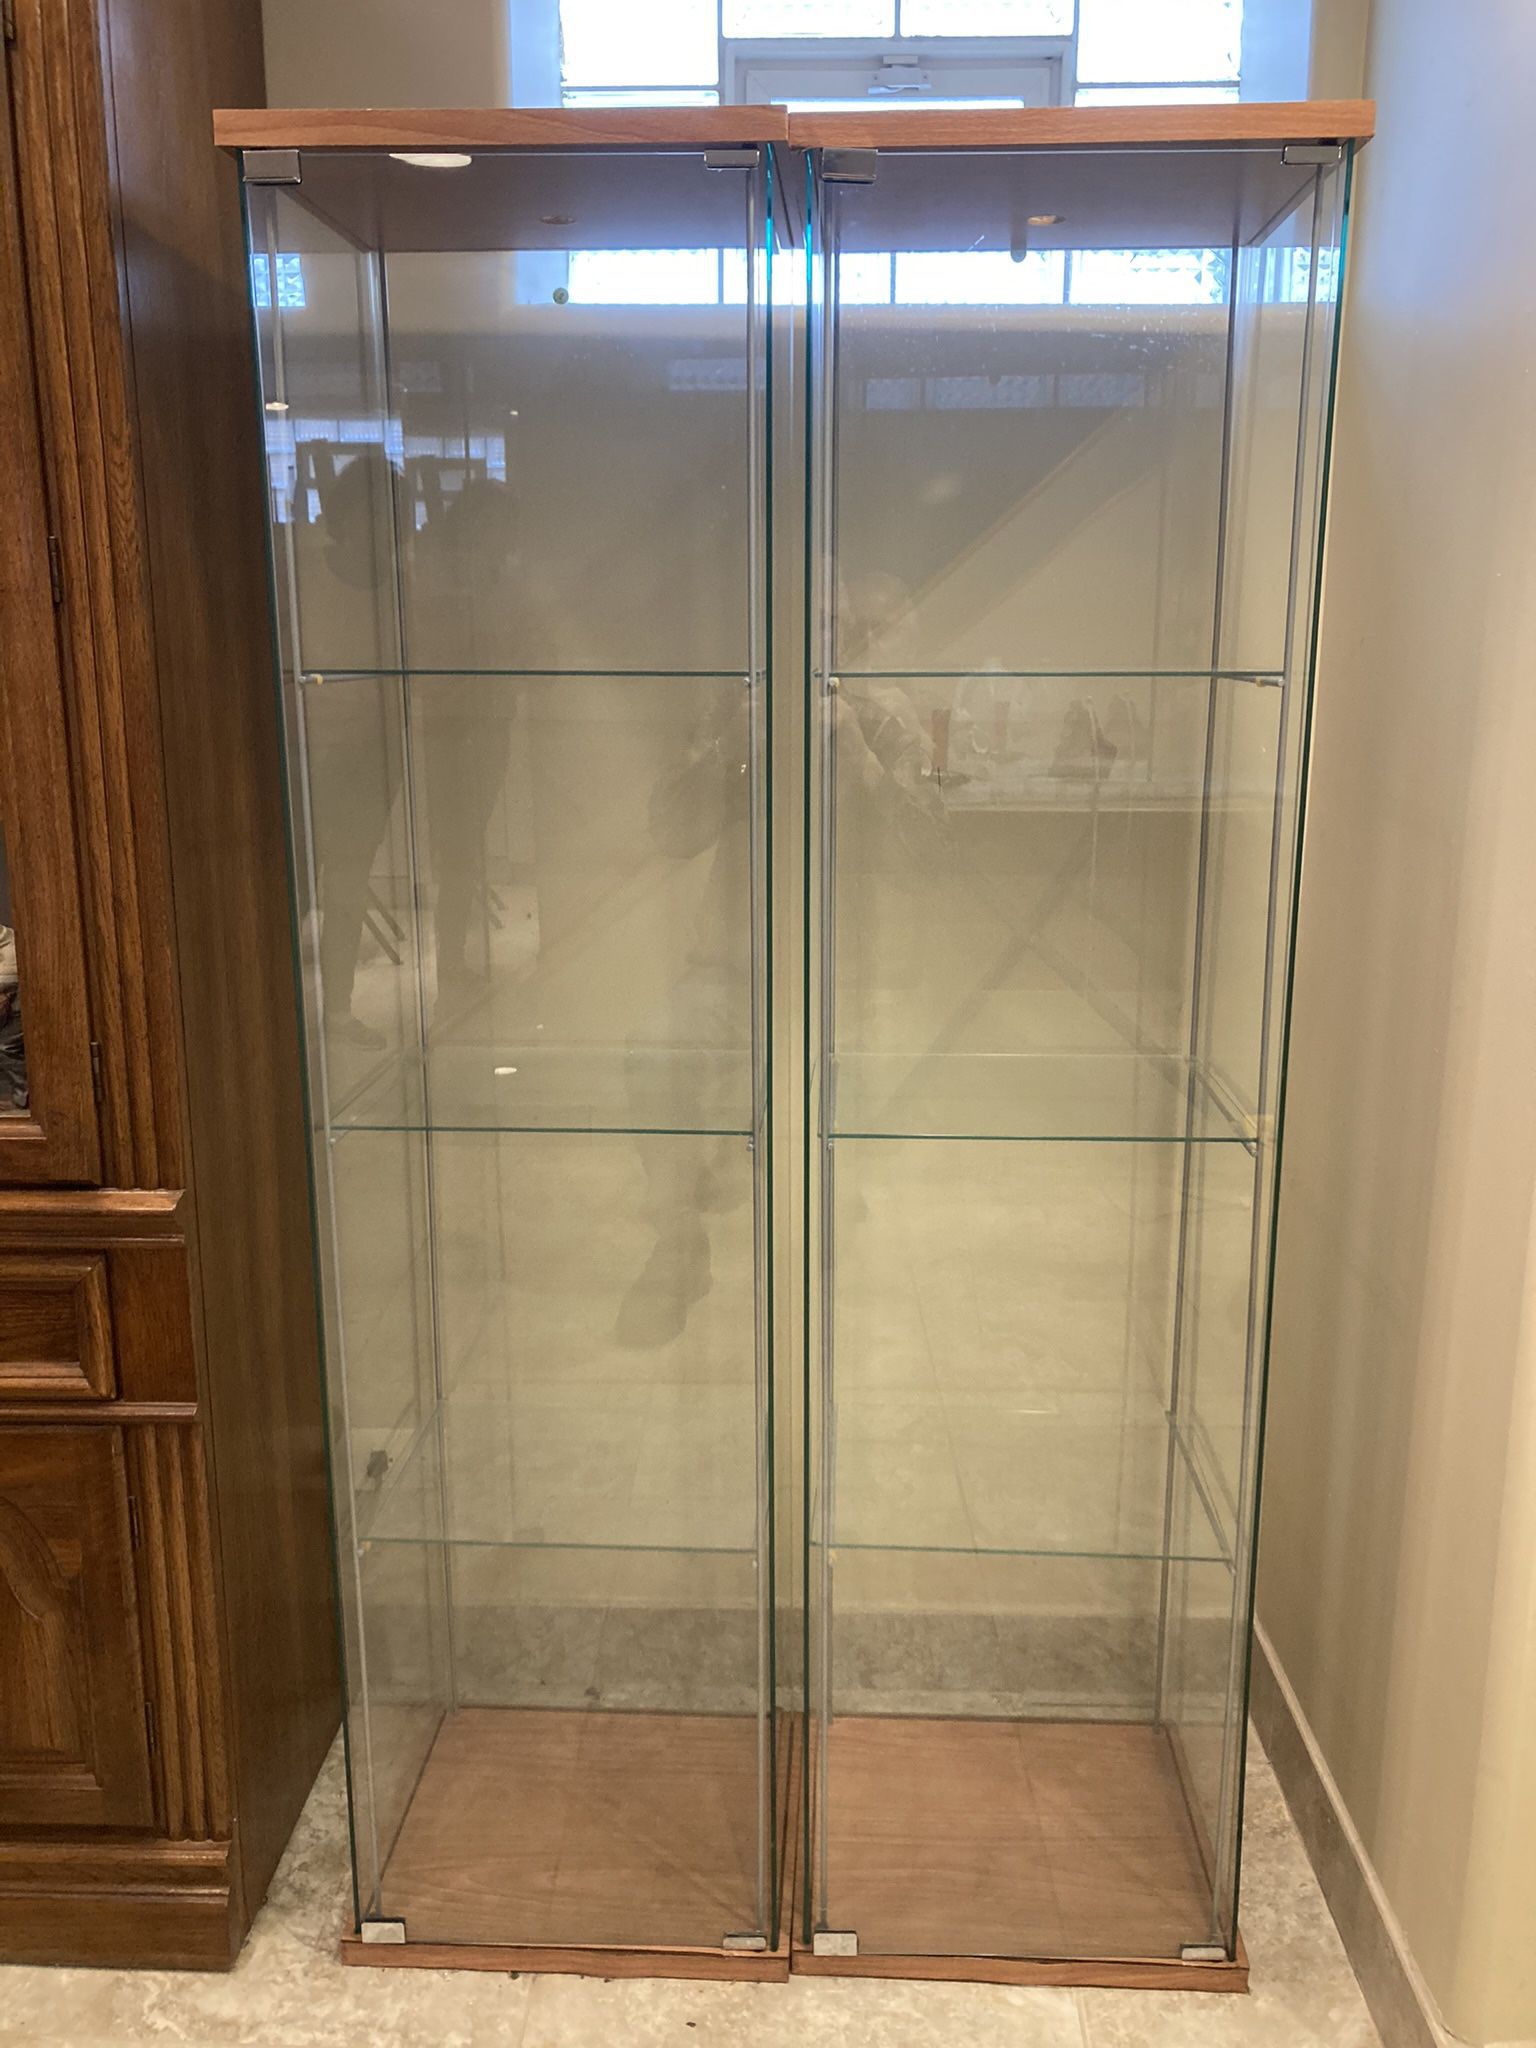 Glass Display Case